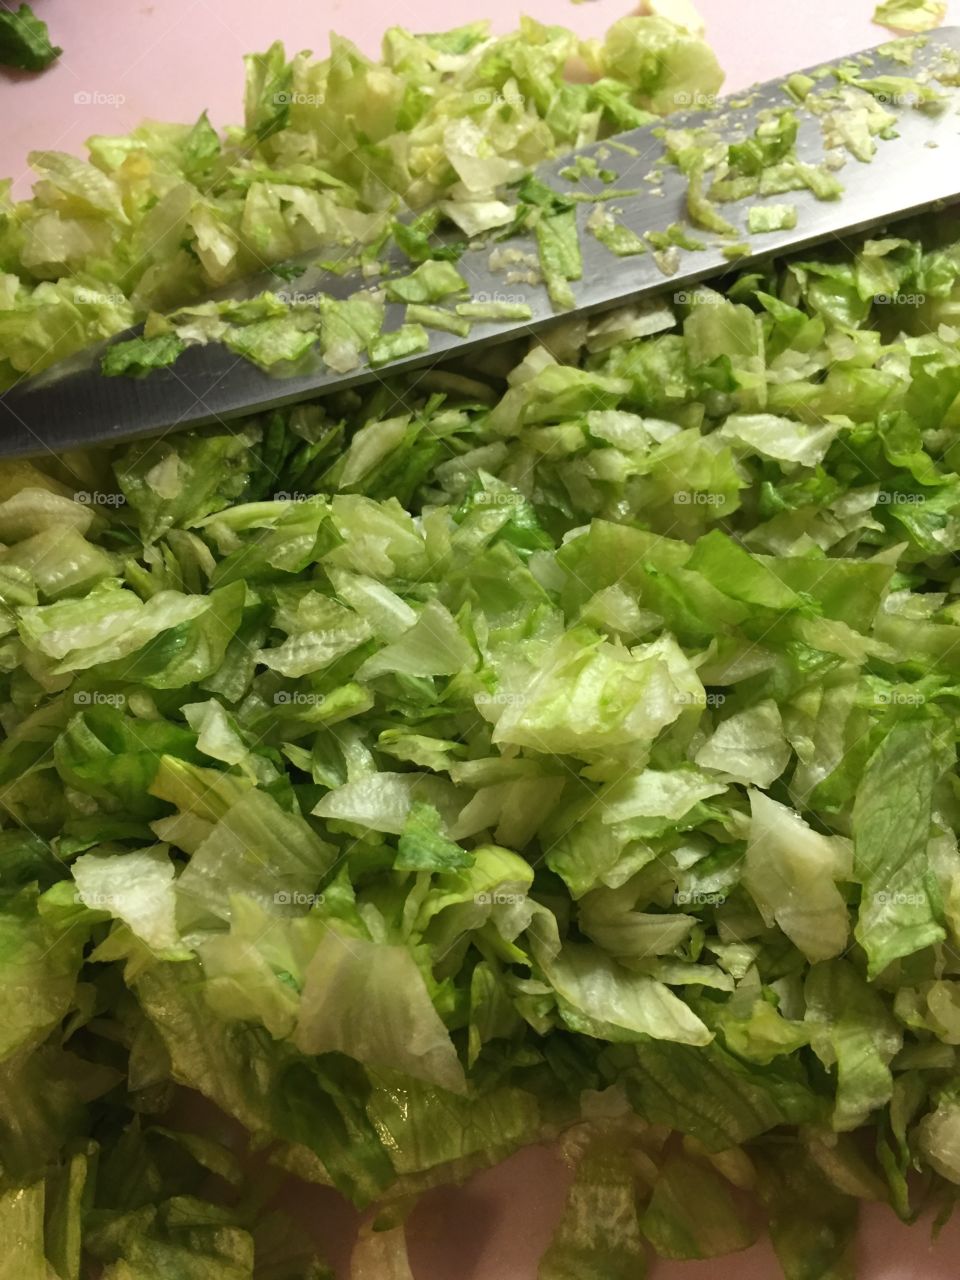 Vegetable, Food, Healthy, Lettuce, Salad